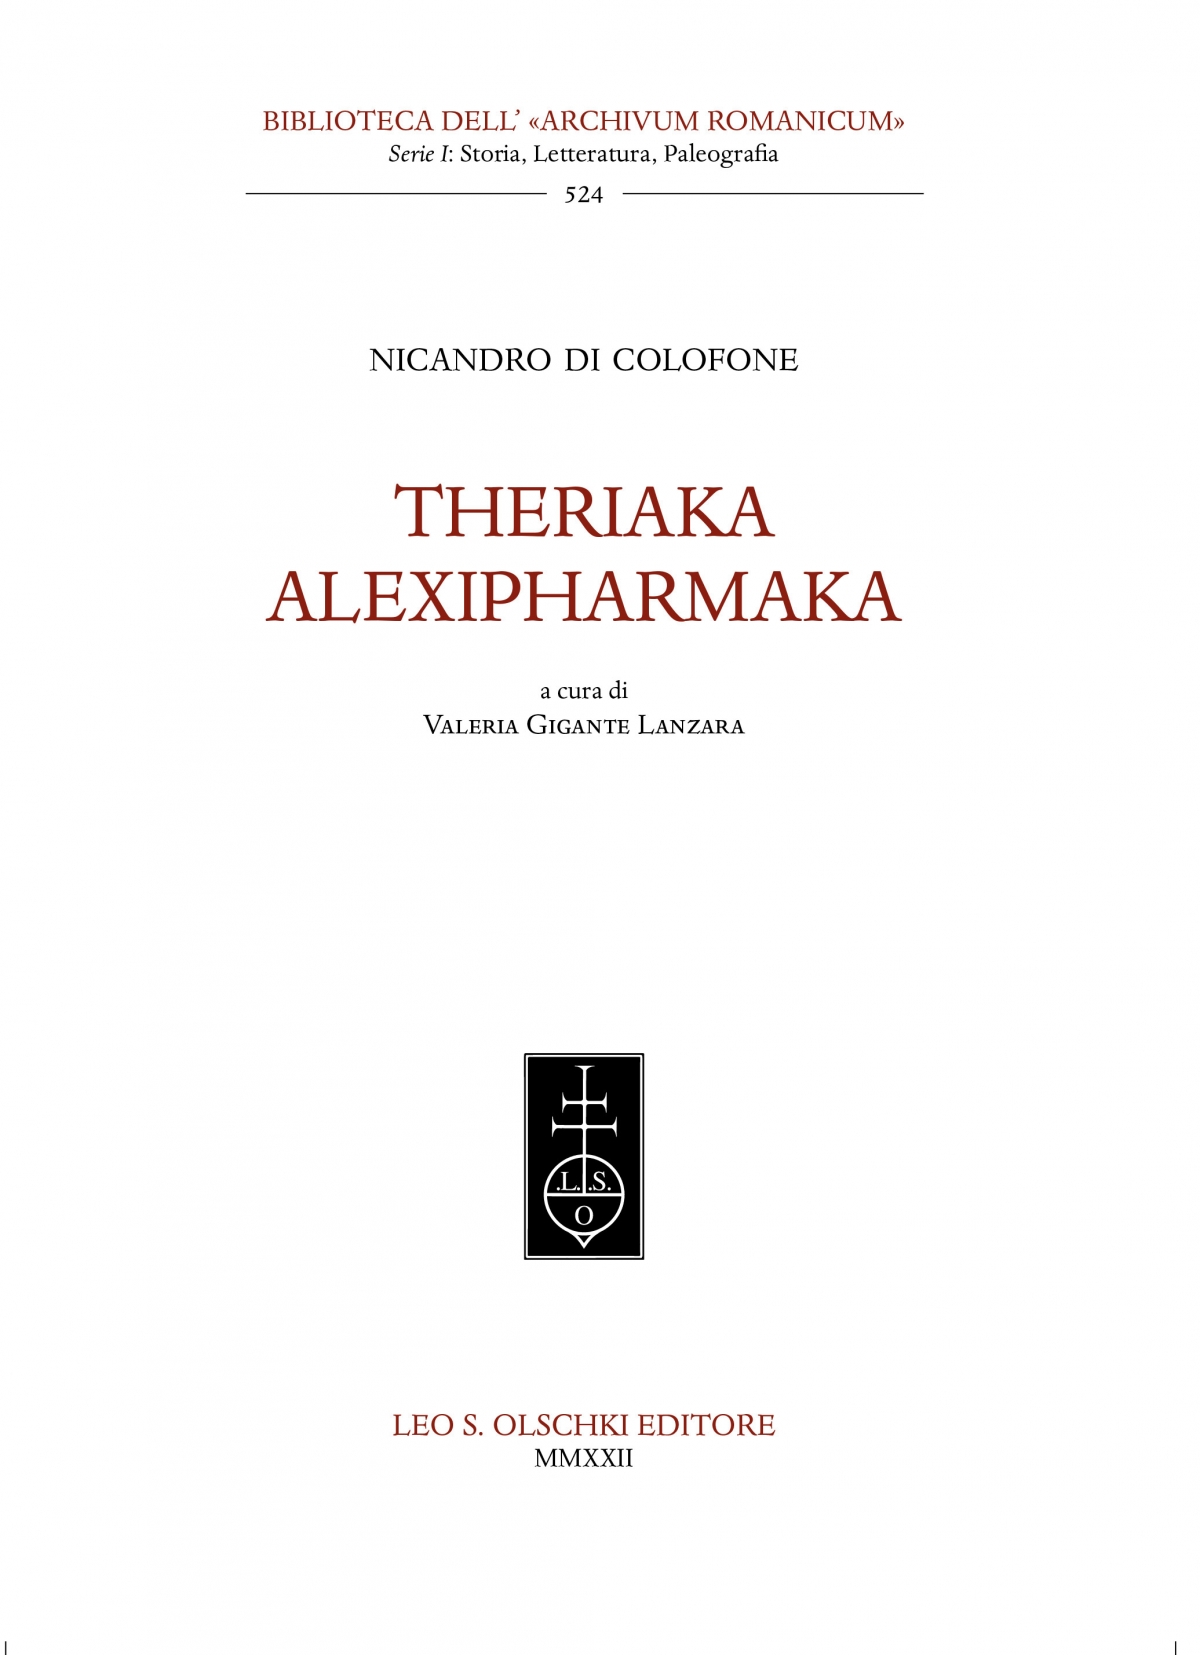 Theriaka-Alexipharmaka